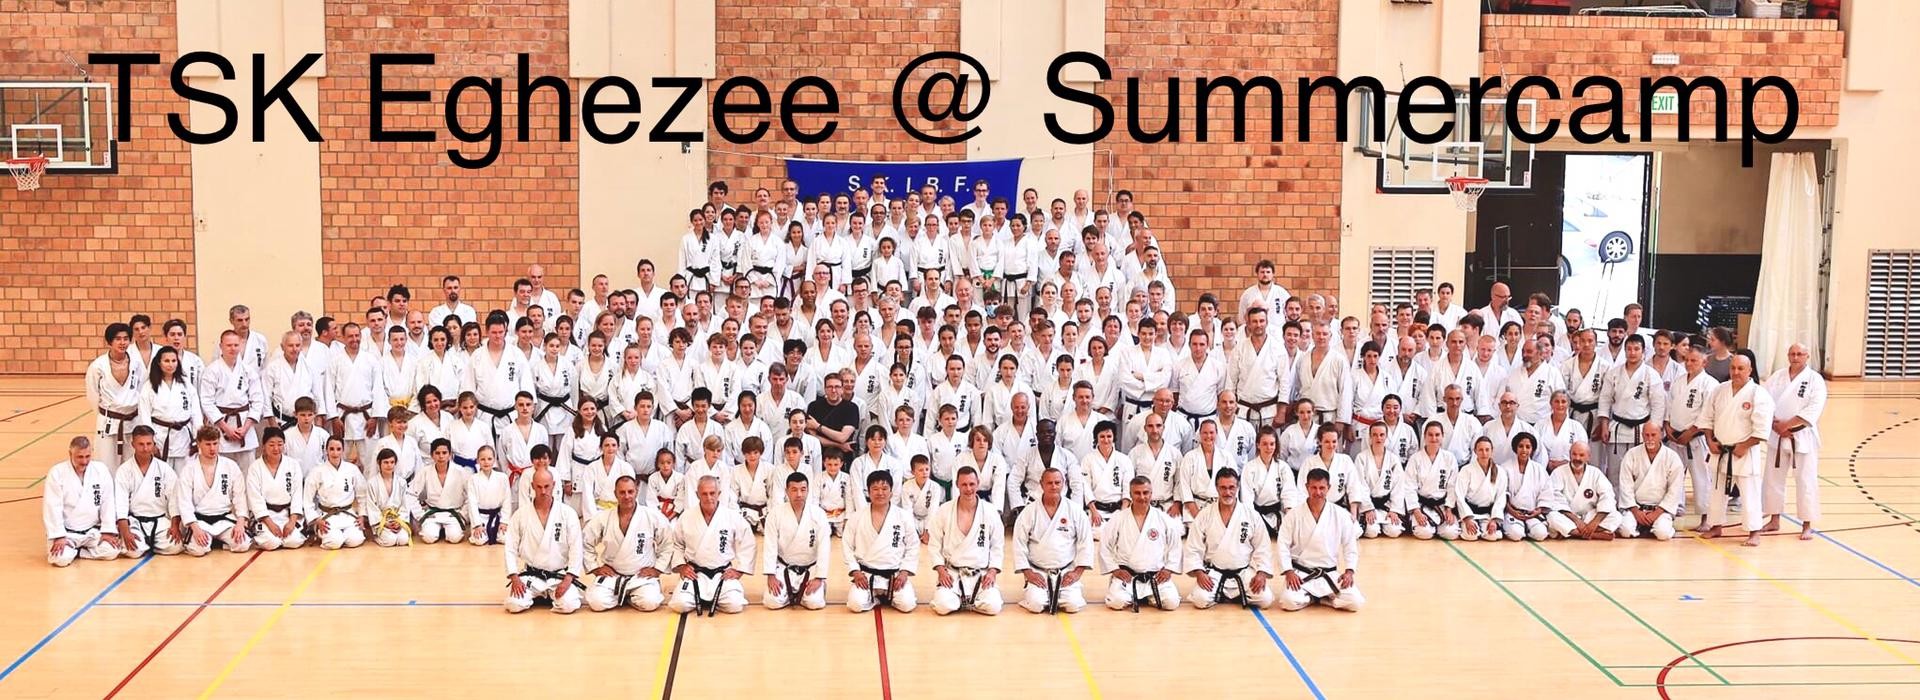 SummerCamp 2022